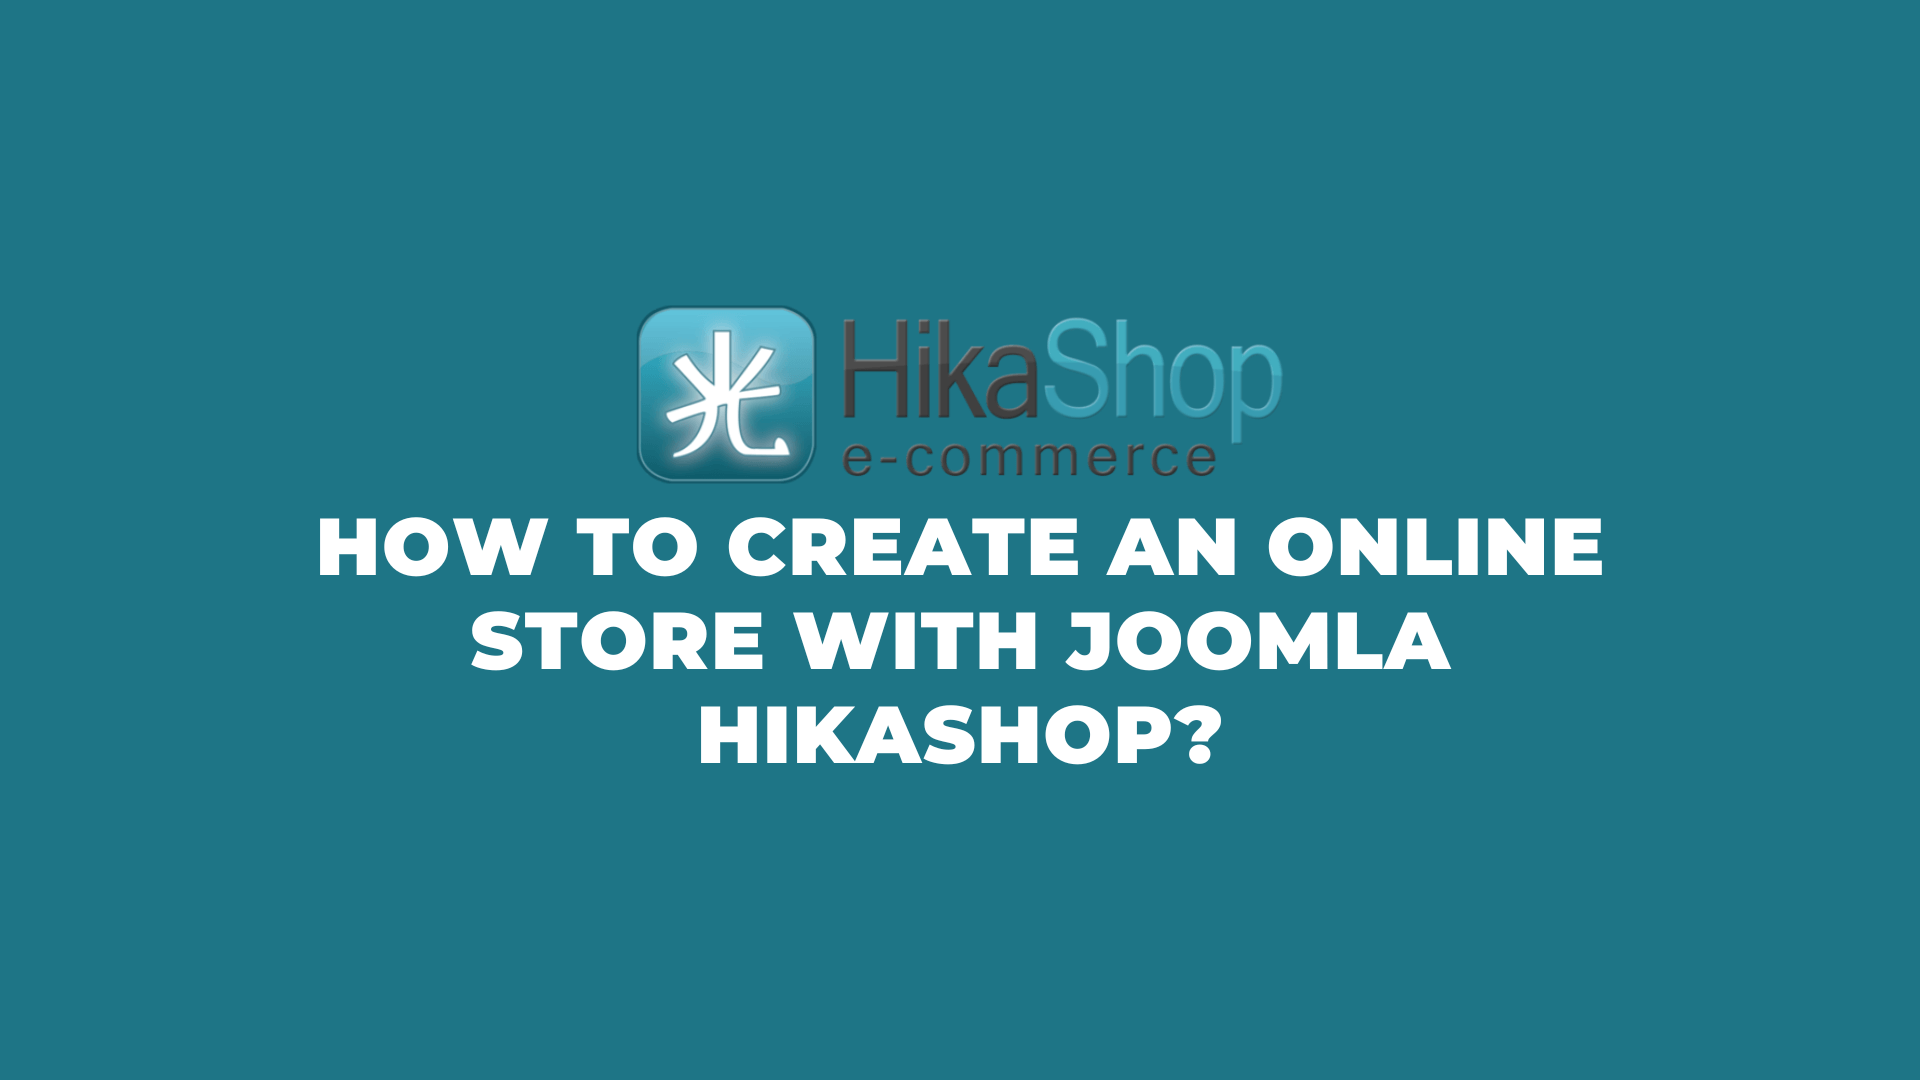 Joomla News: How To Build An Online Shop With Hikashop